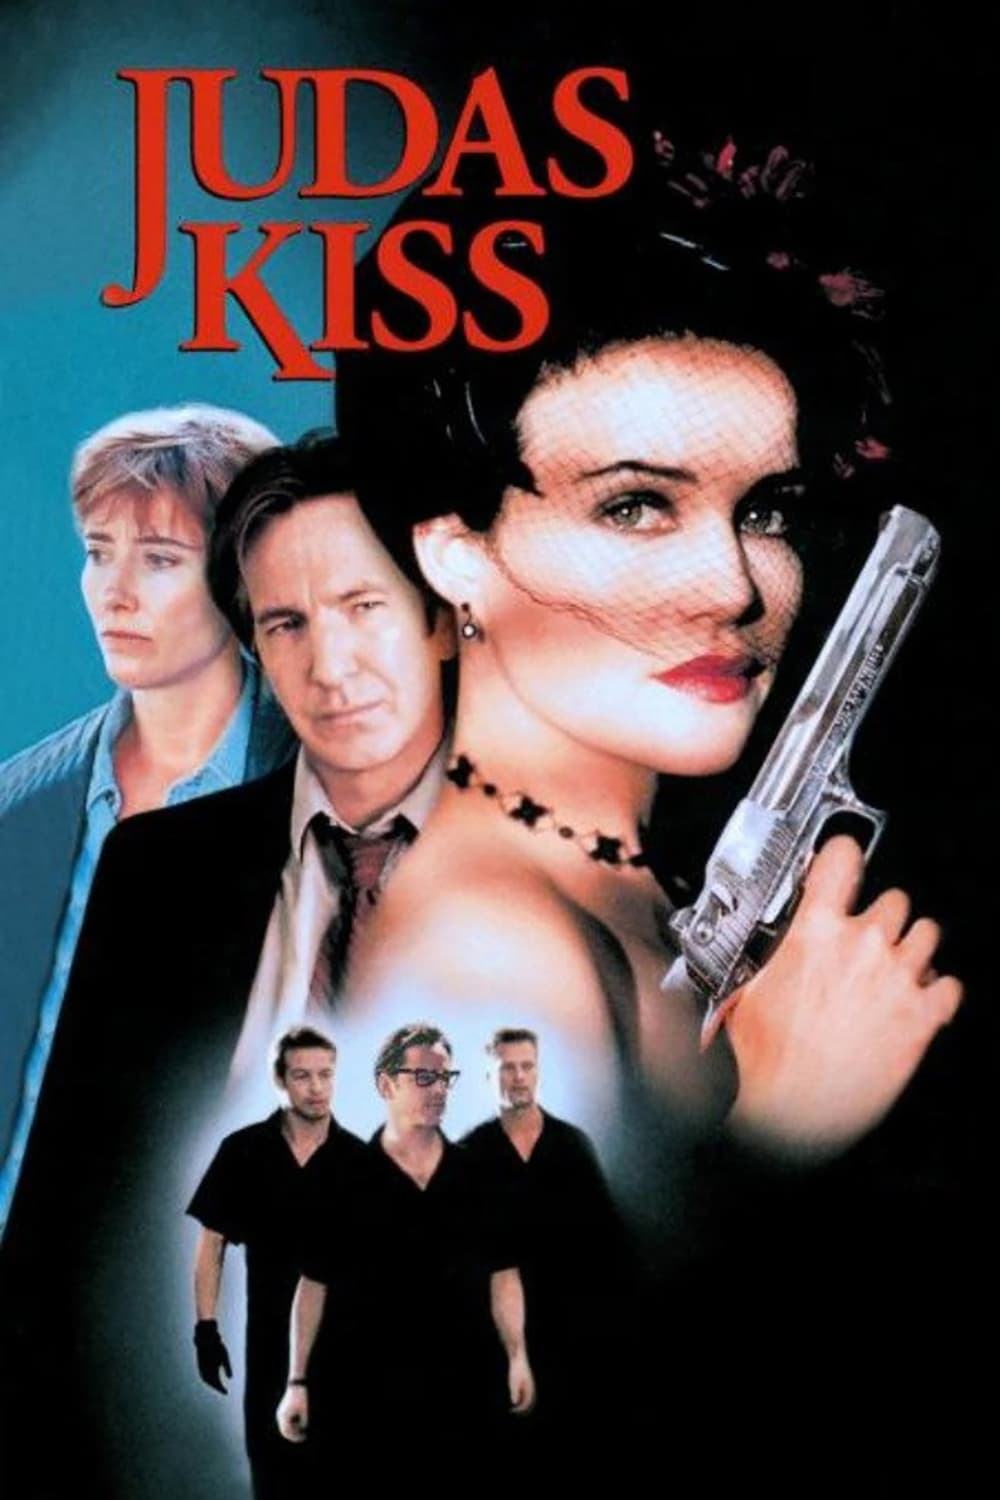 Plakat von "Judas Kiss"